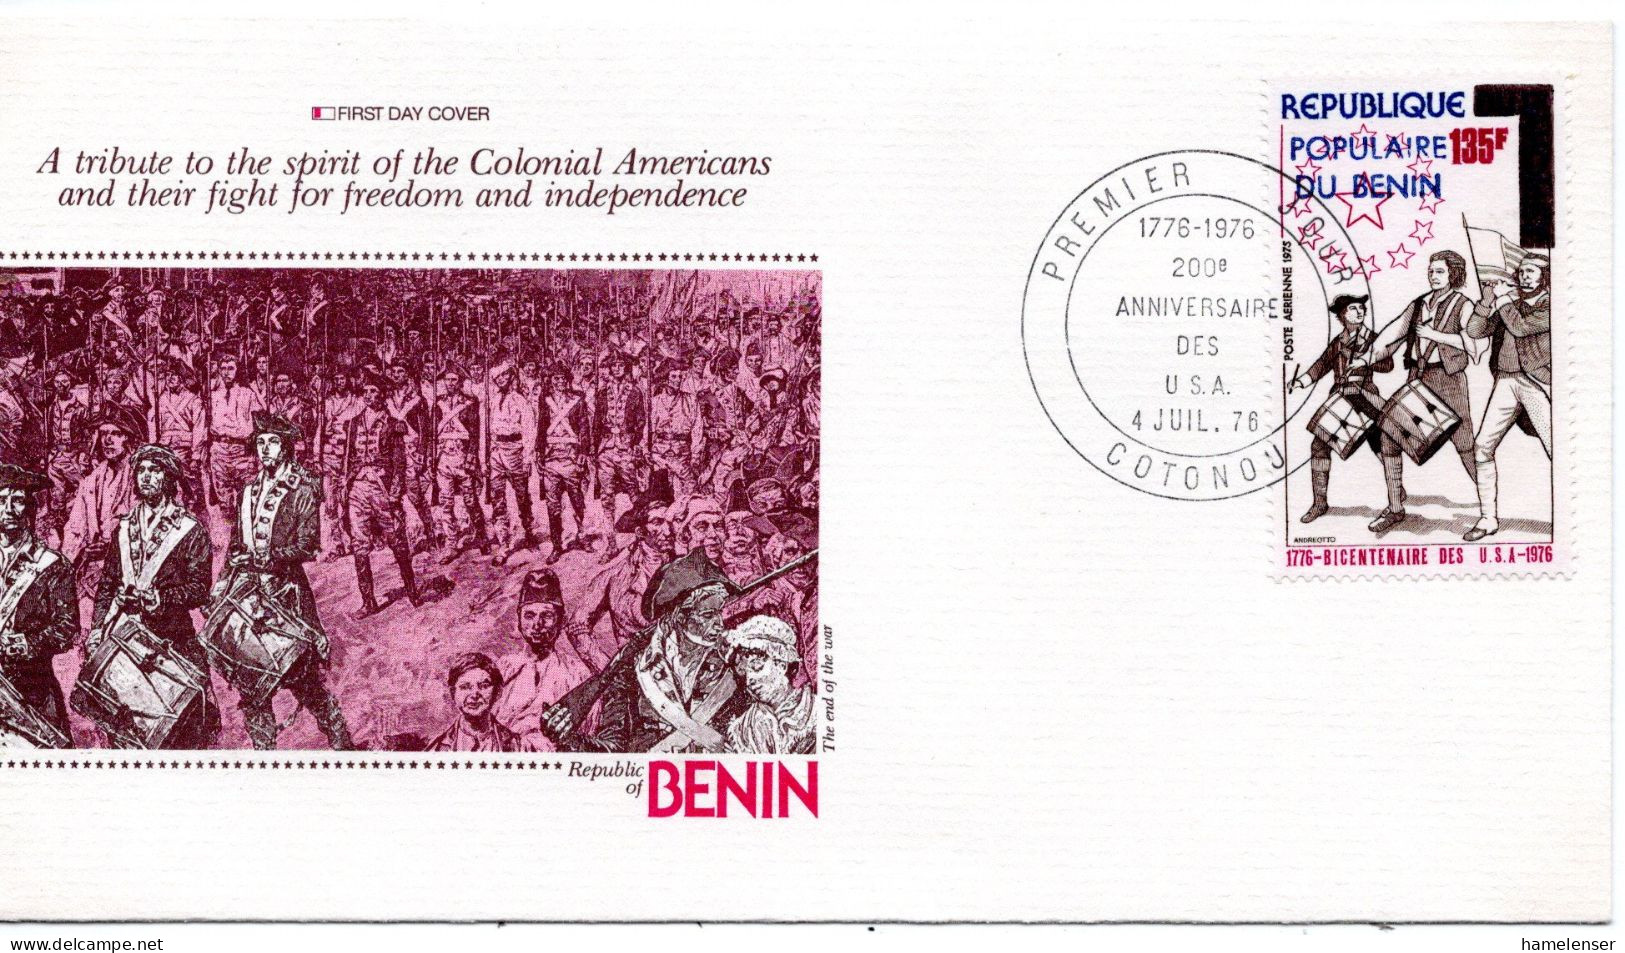 62658 - Benin - 1976 - 135F 200 Jahre USA A FDC COTONOU - Unabhängigkeit USA